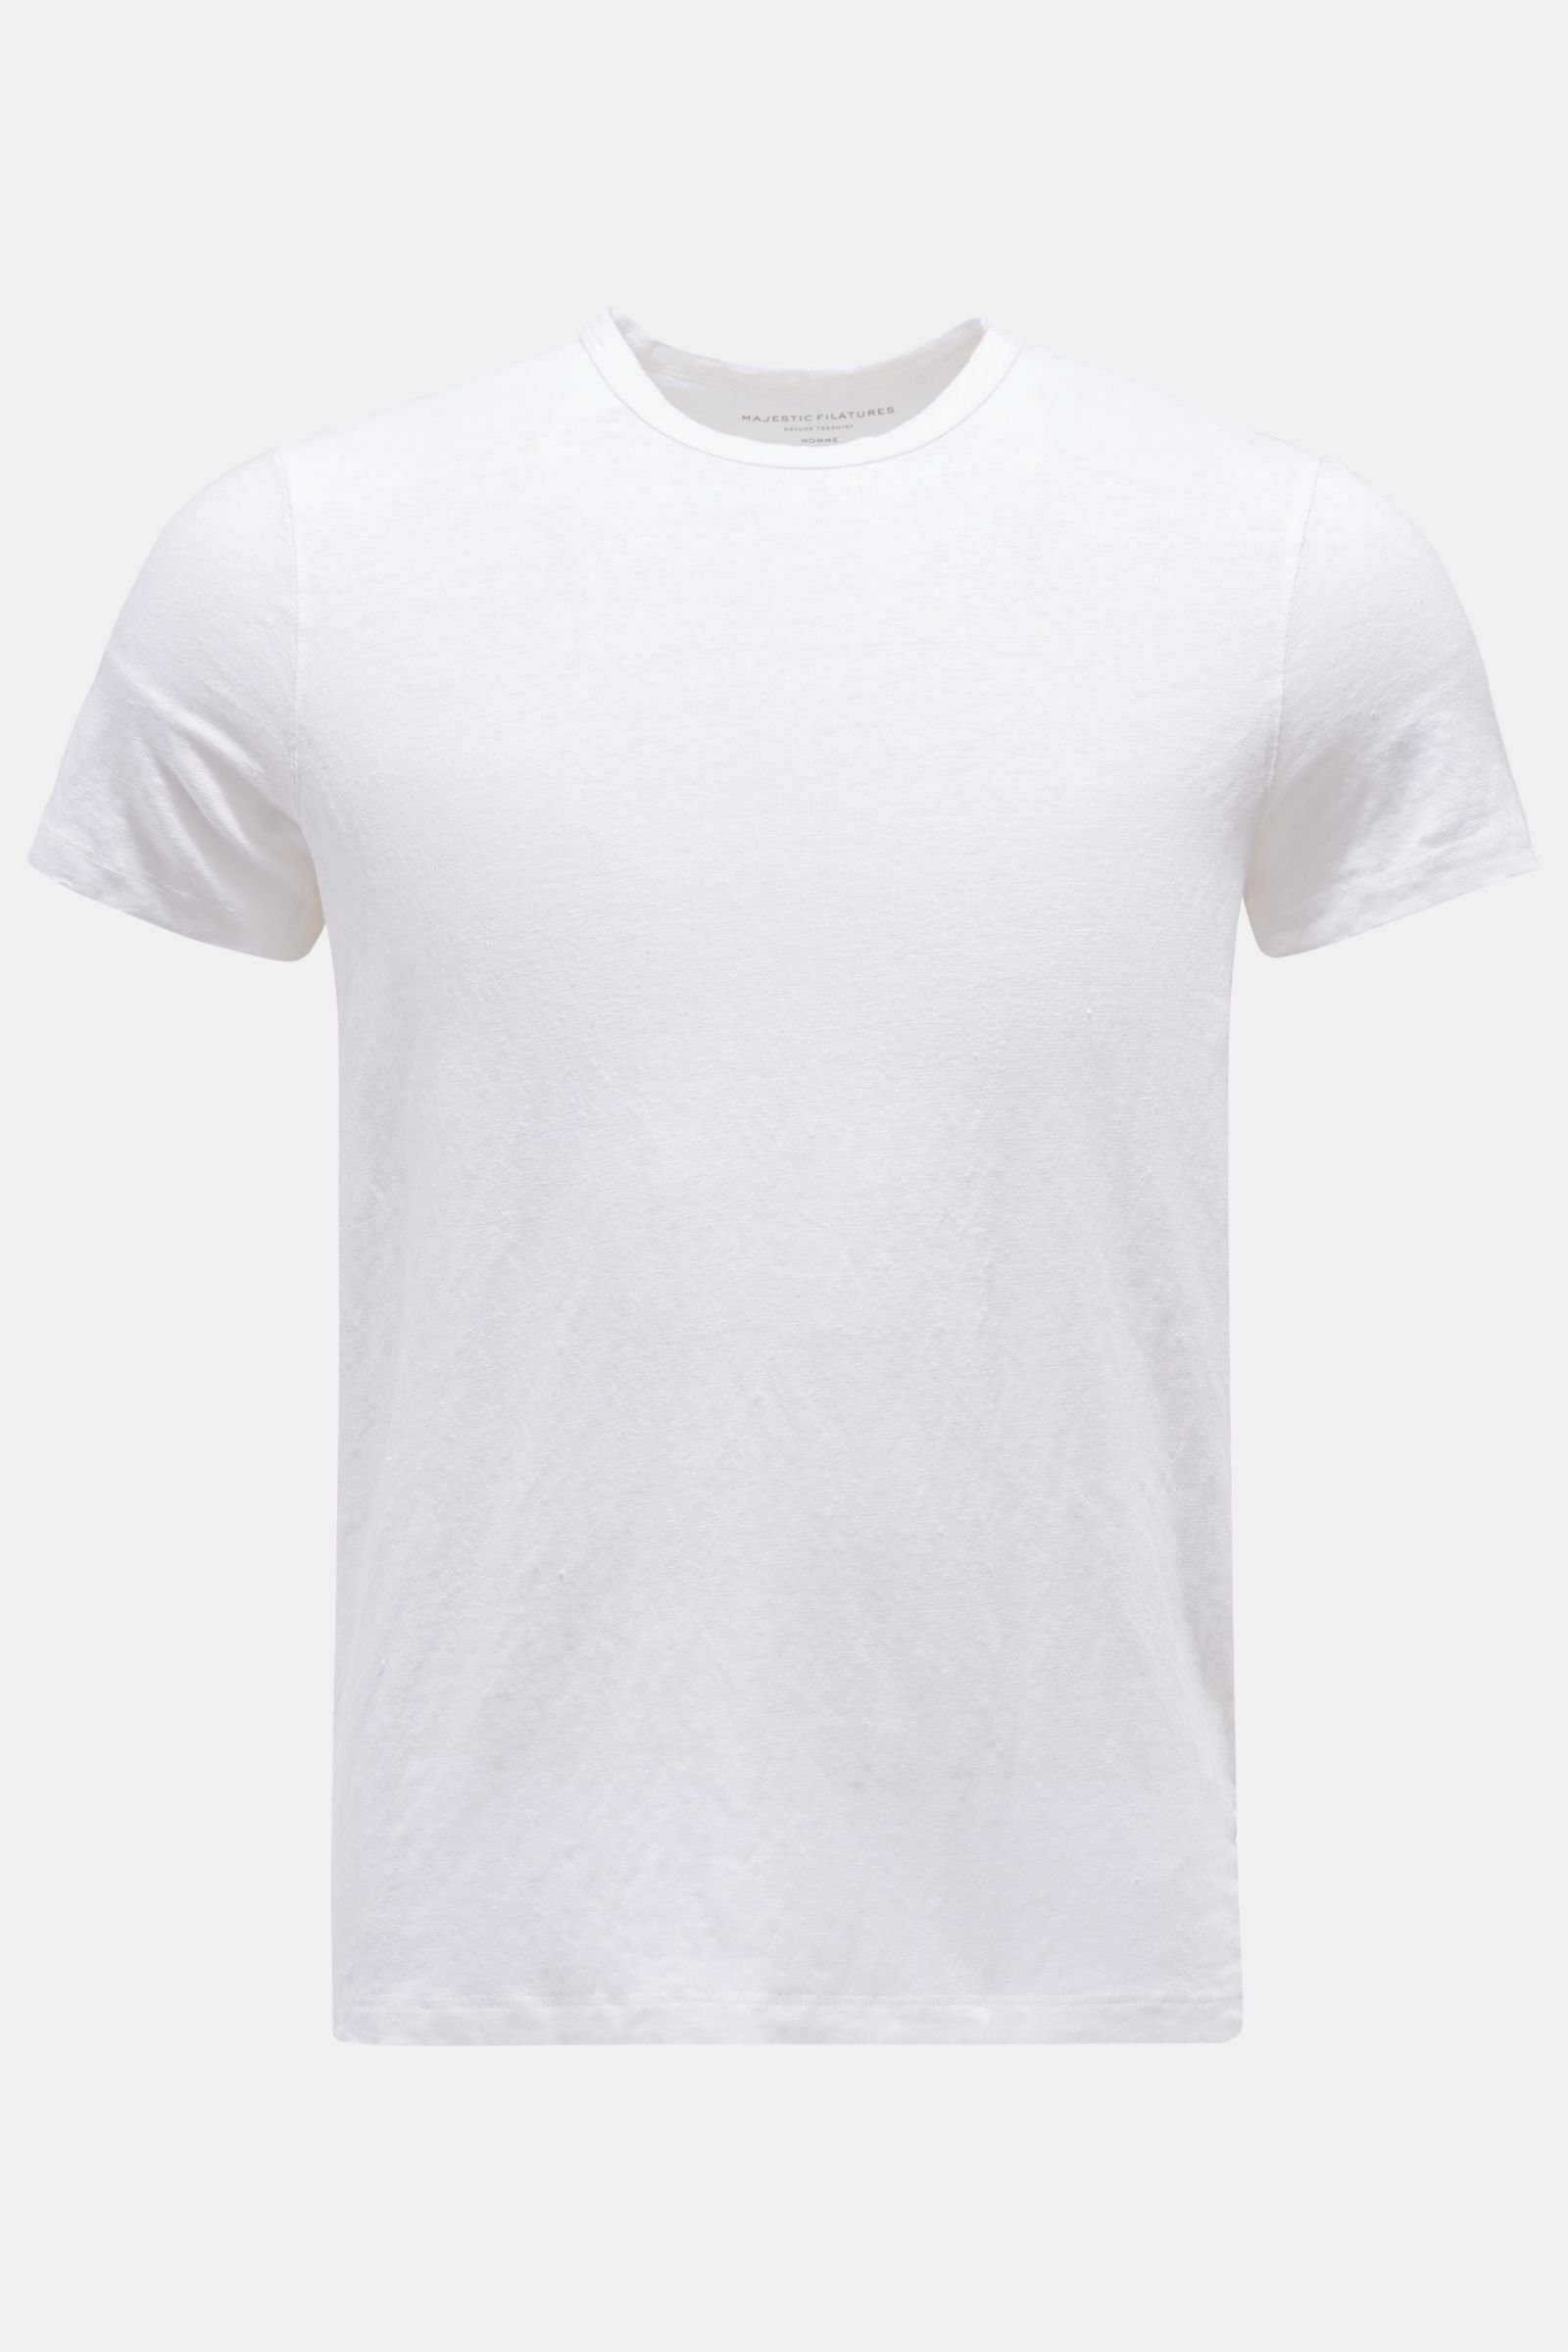 Linen crew neck T-shirt white